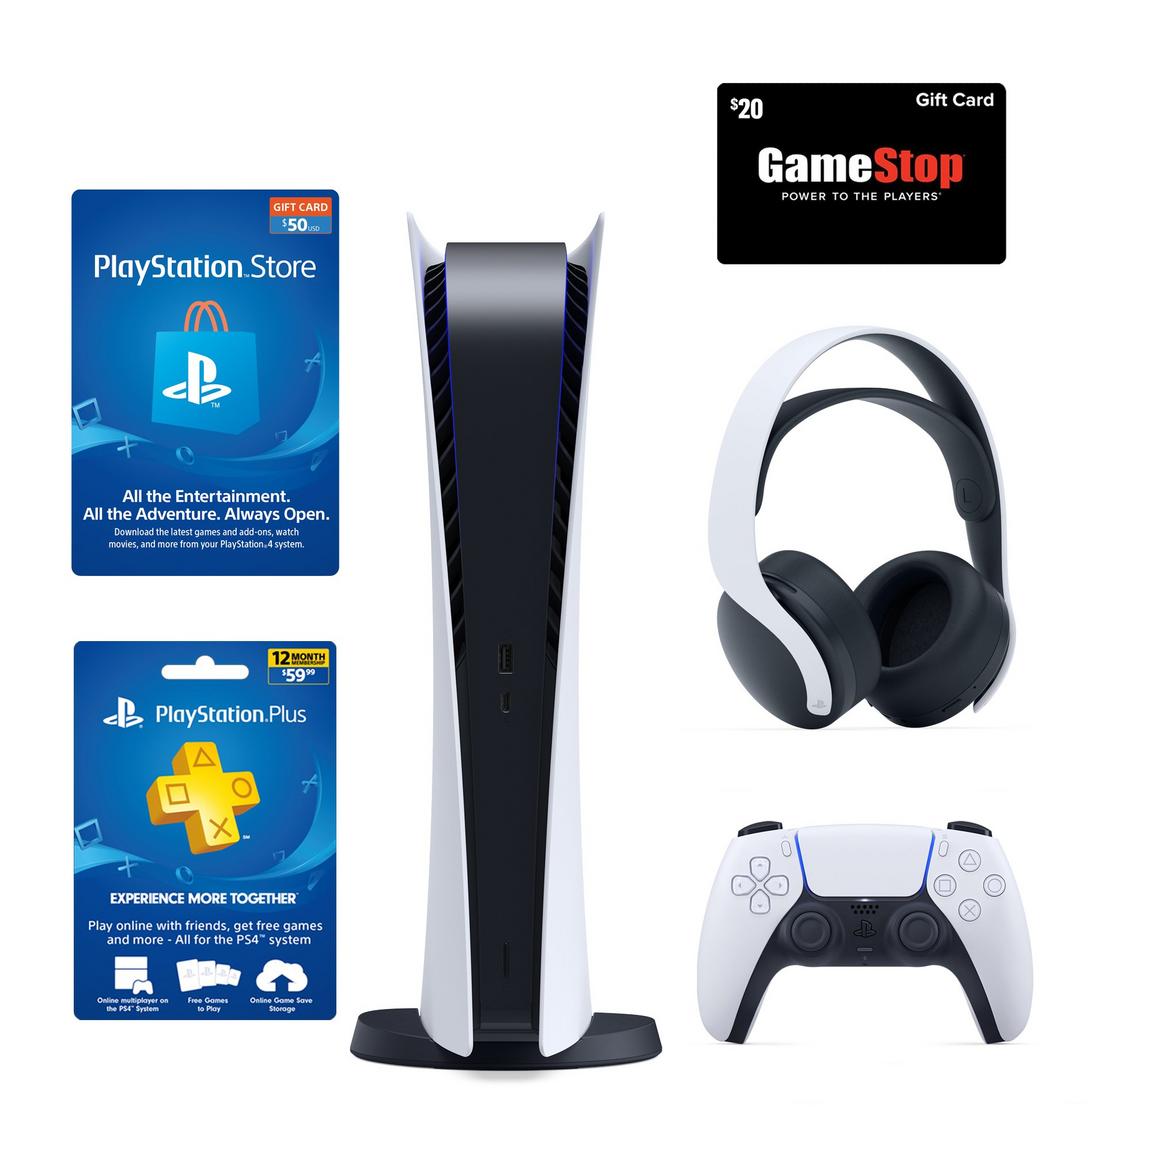 stykke Centrum Blive kold Spiel Times Deals on Twitter: "PlayStation 5 Digital Edition Wireless  Headset, PS Plus, $50 PS Currency System Bundle with $20 Digital GameStop  Gift Card https://t.co/FJqThhoS89 #ad https://t.co/FJGLaXrXtw" / Twitter